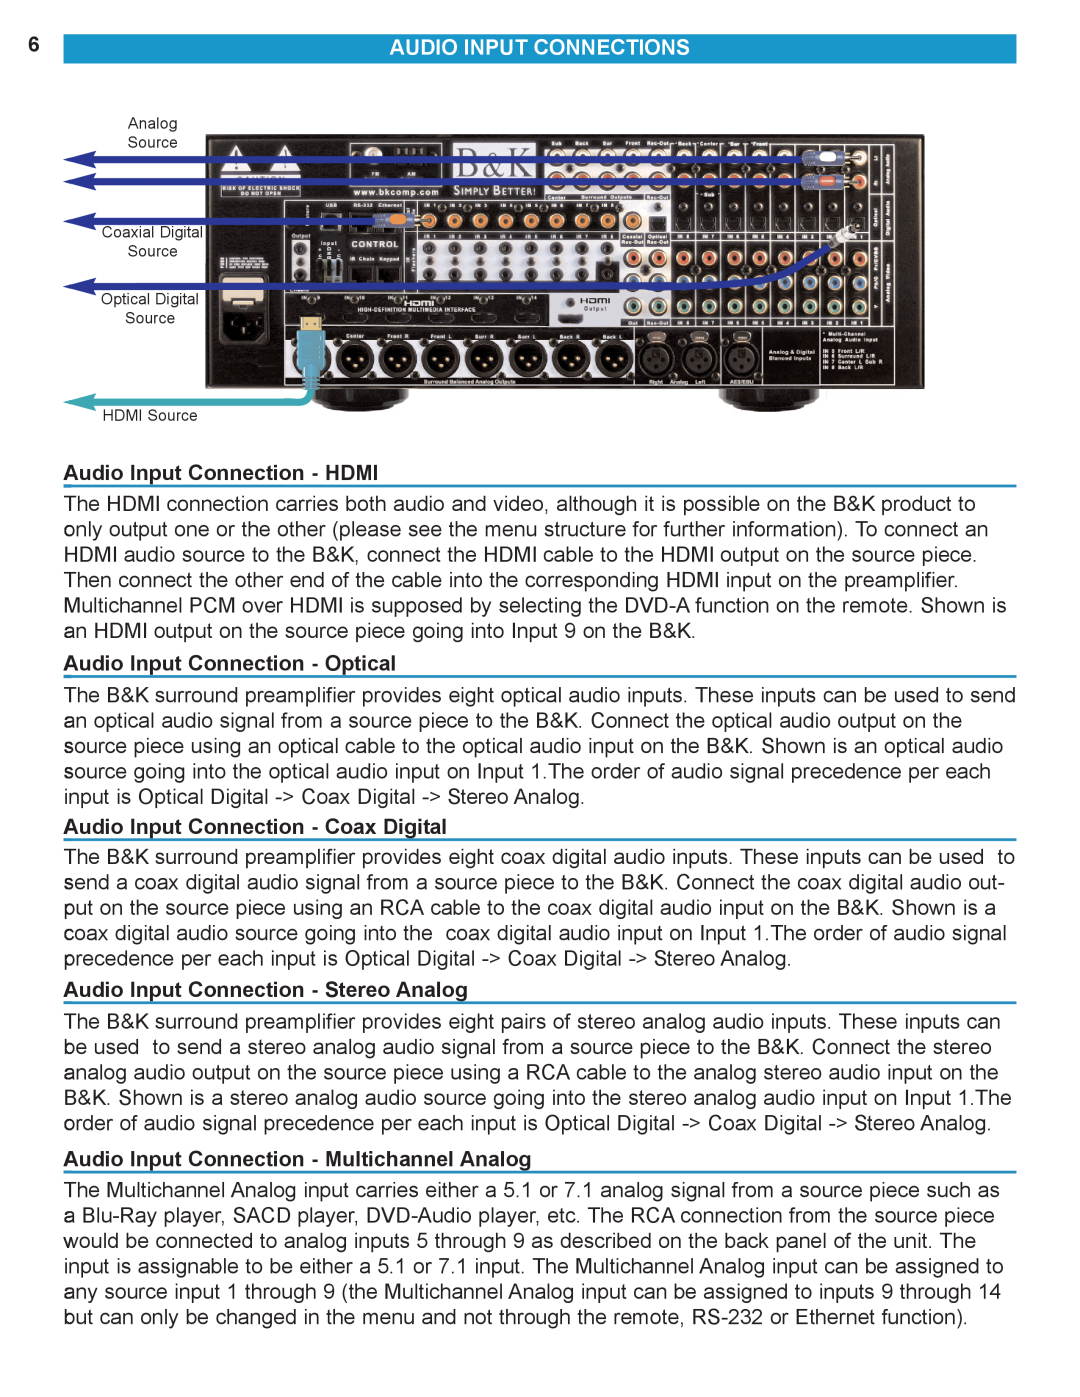 B&K HT 70 manual Audio Input Connections, Audio Input Connection - HDMI, Audio Input Connection - Optical 